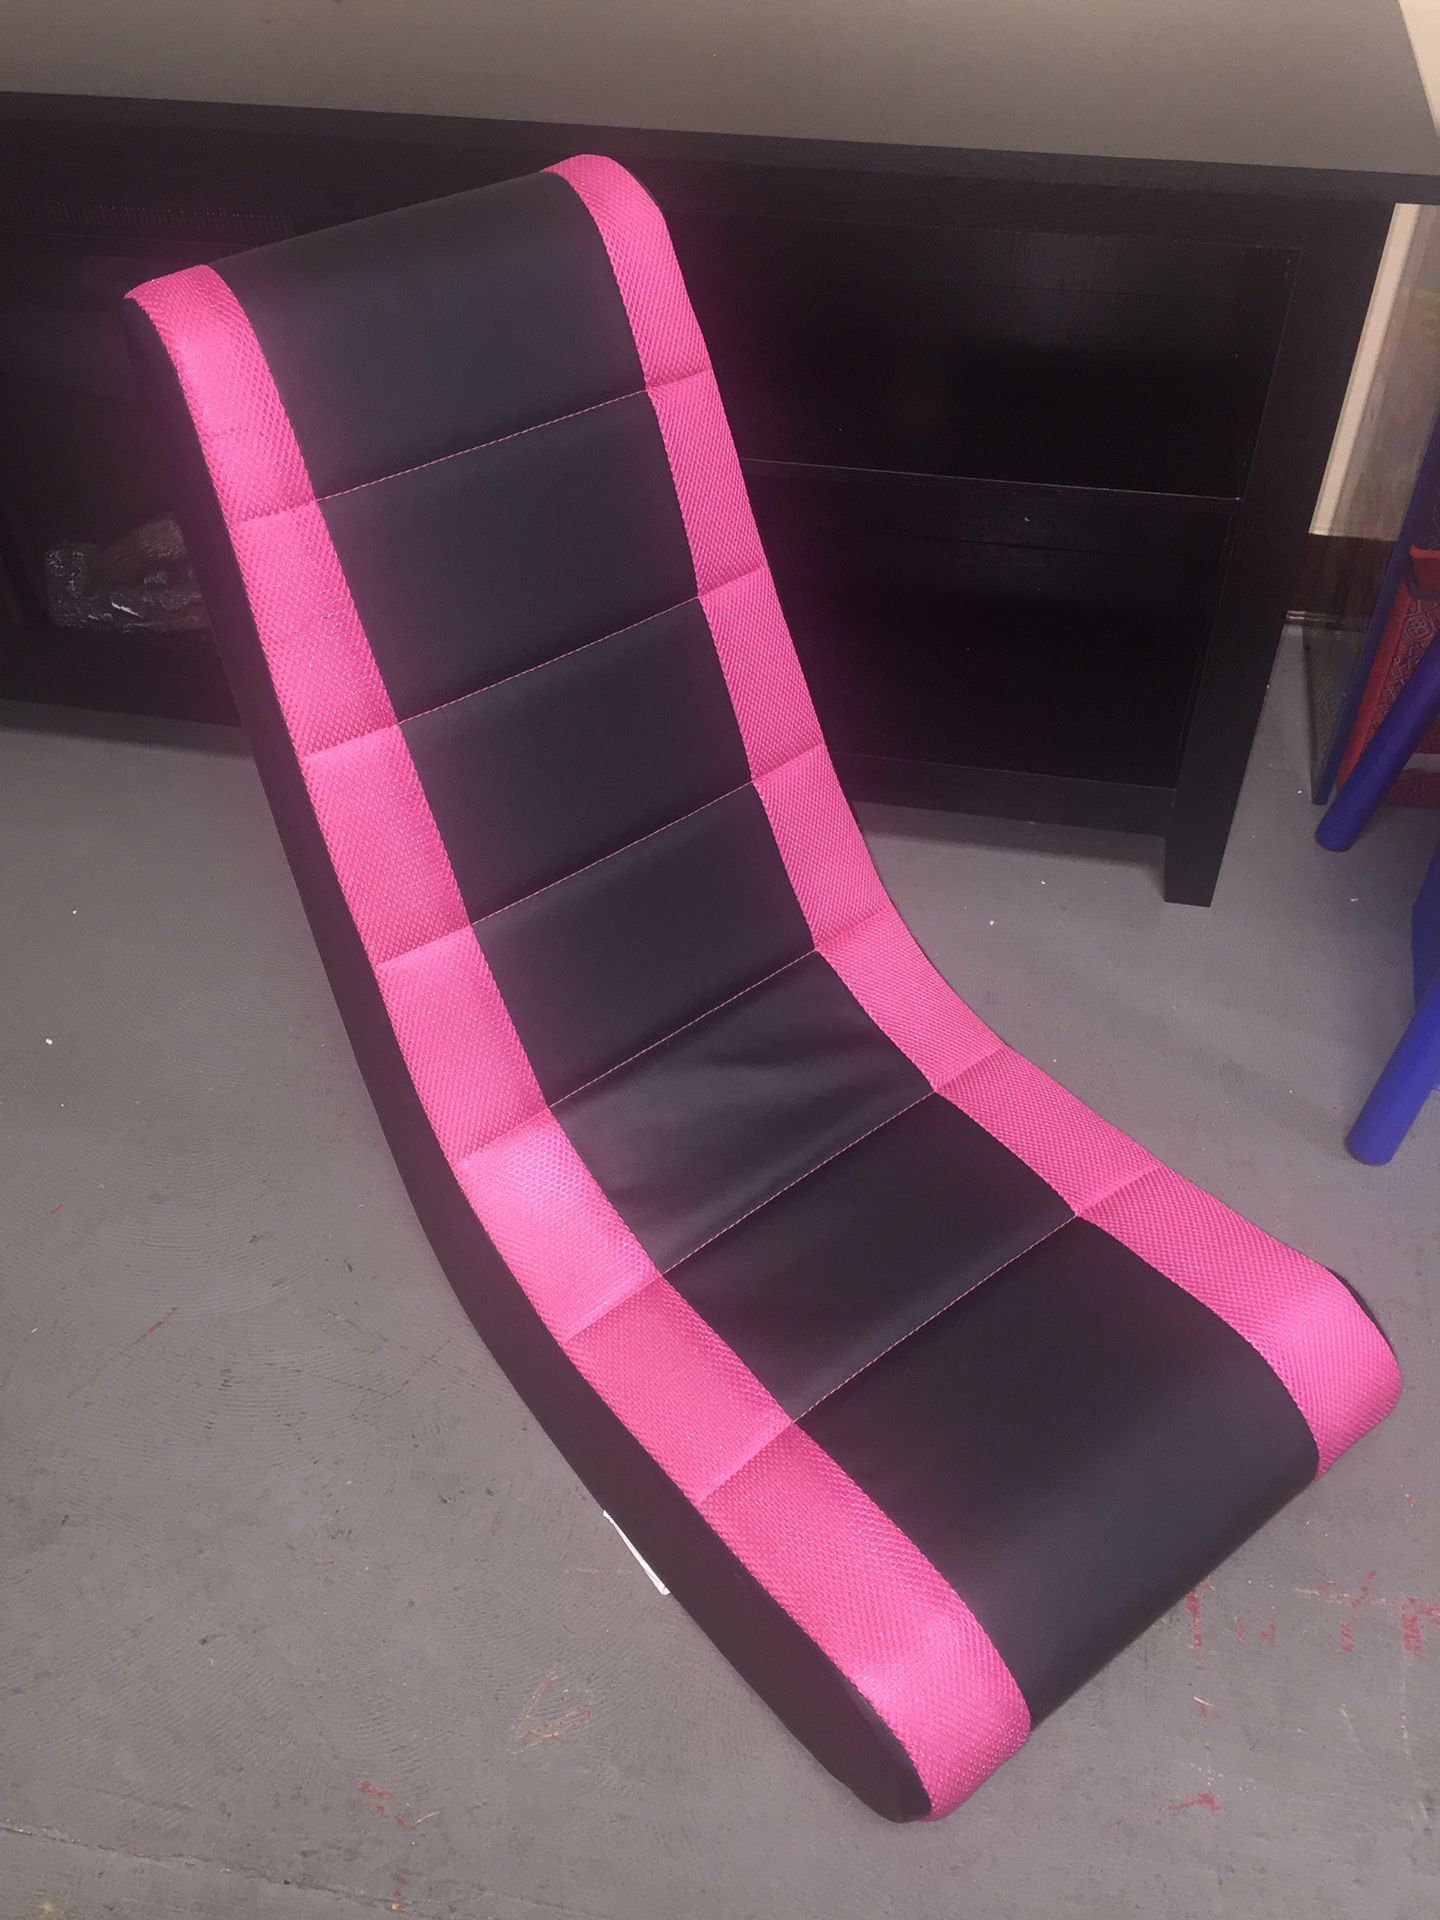 New Classic Video Rocker Gaming Chair, Black/Pink